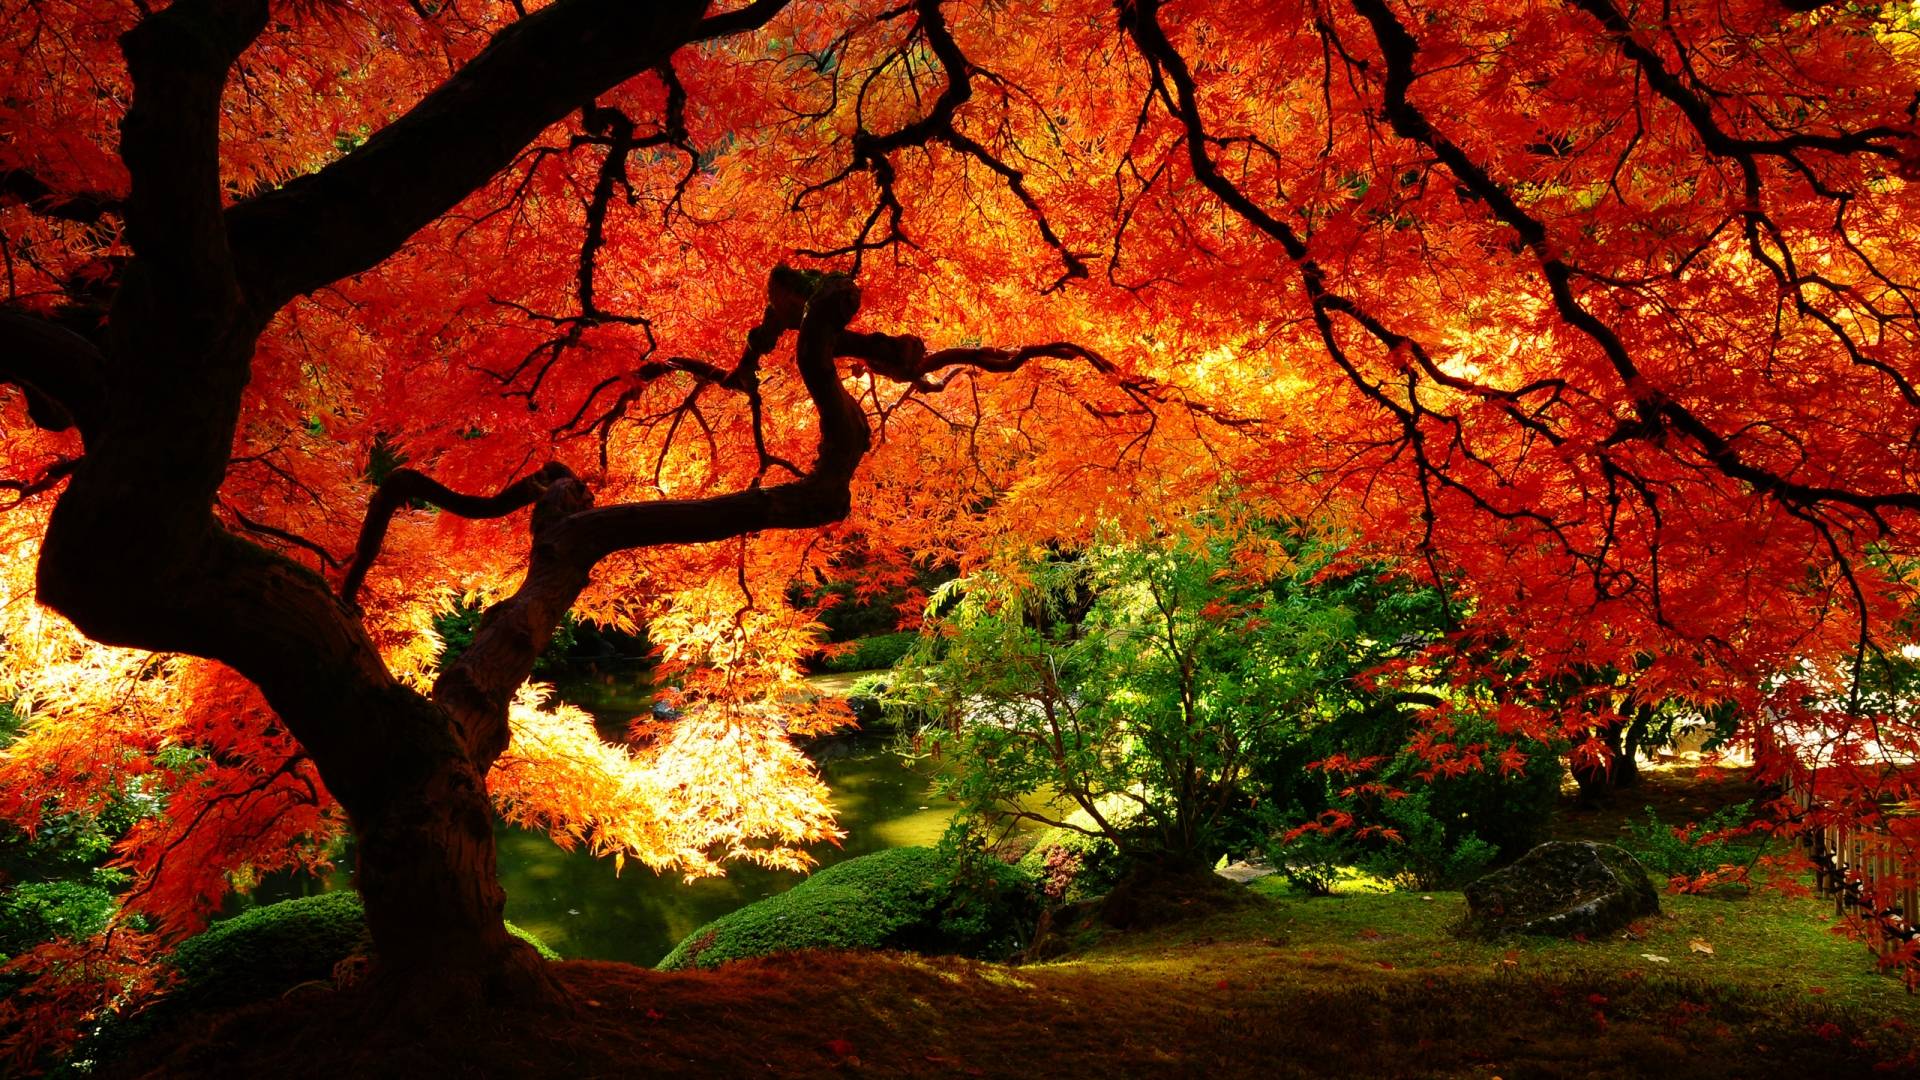 Hd Wallpaper Free Autumn Desktop Background. Marvel Compound